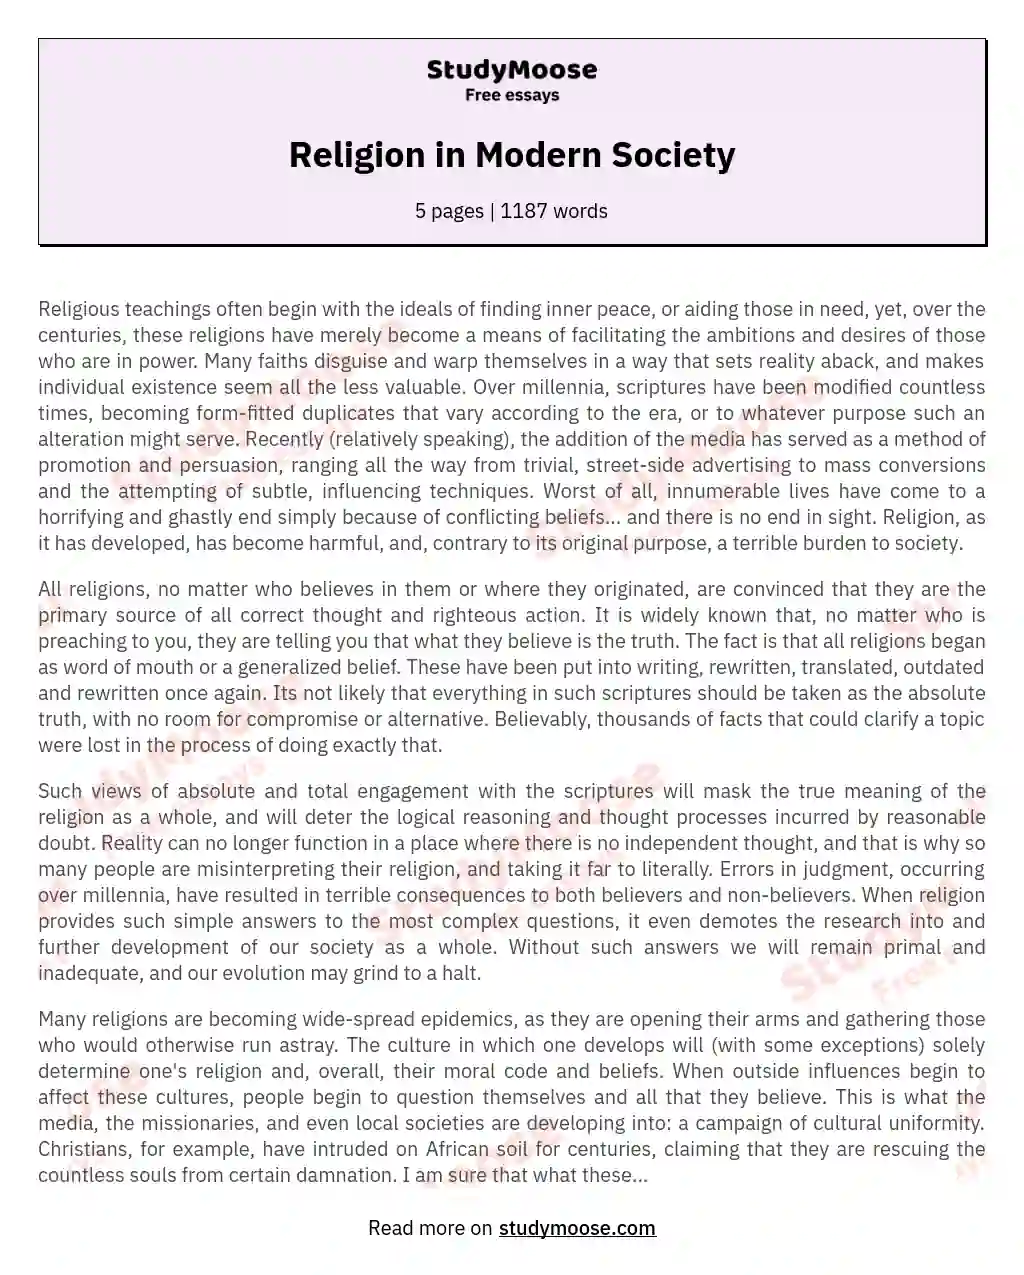 Religion in Modern Society essay